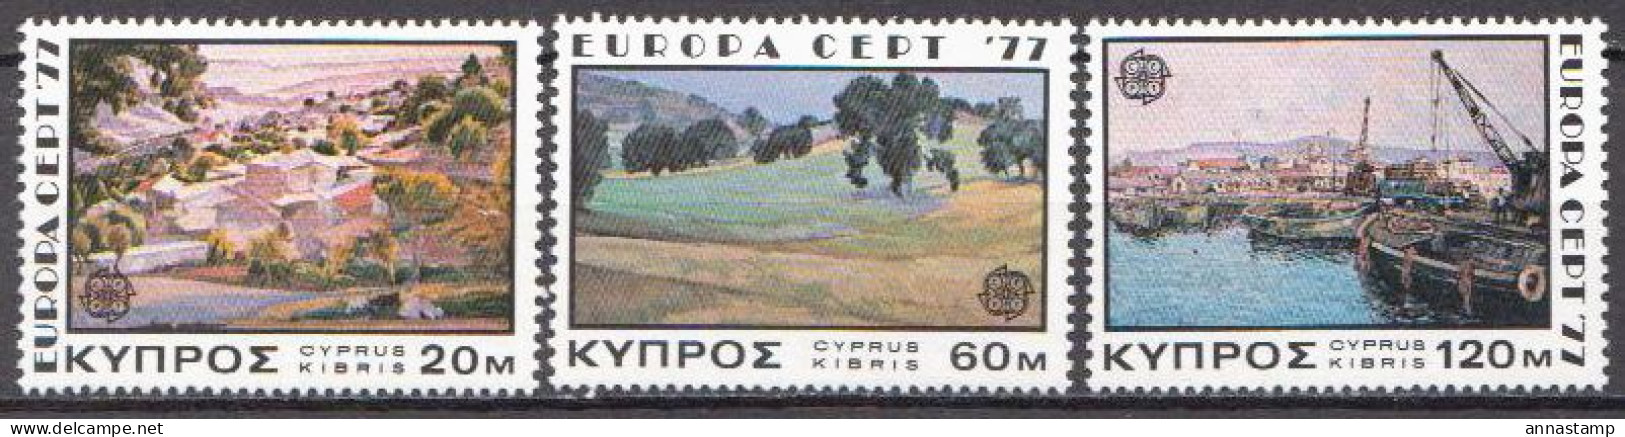 Cyprus MNH Set - 1977